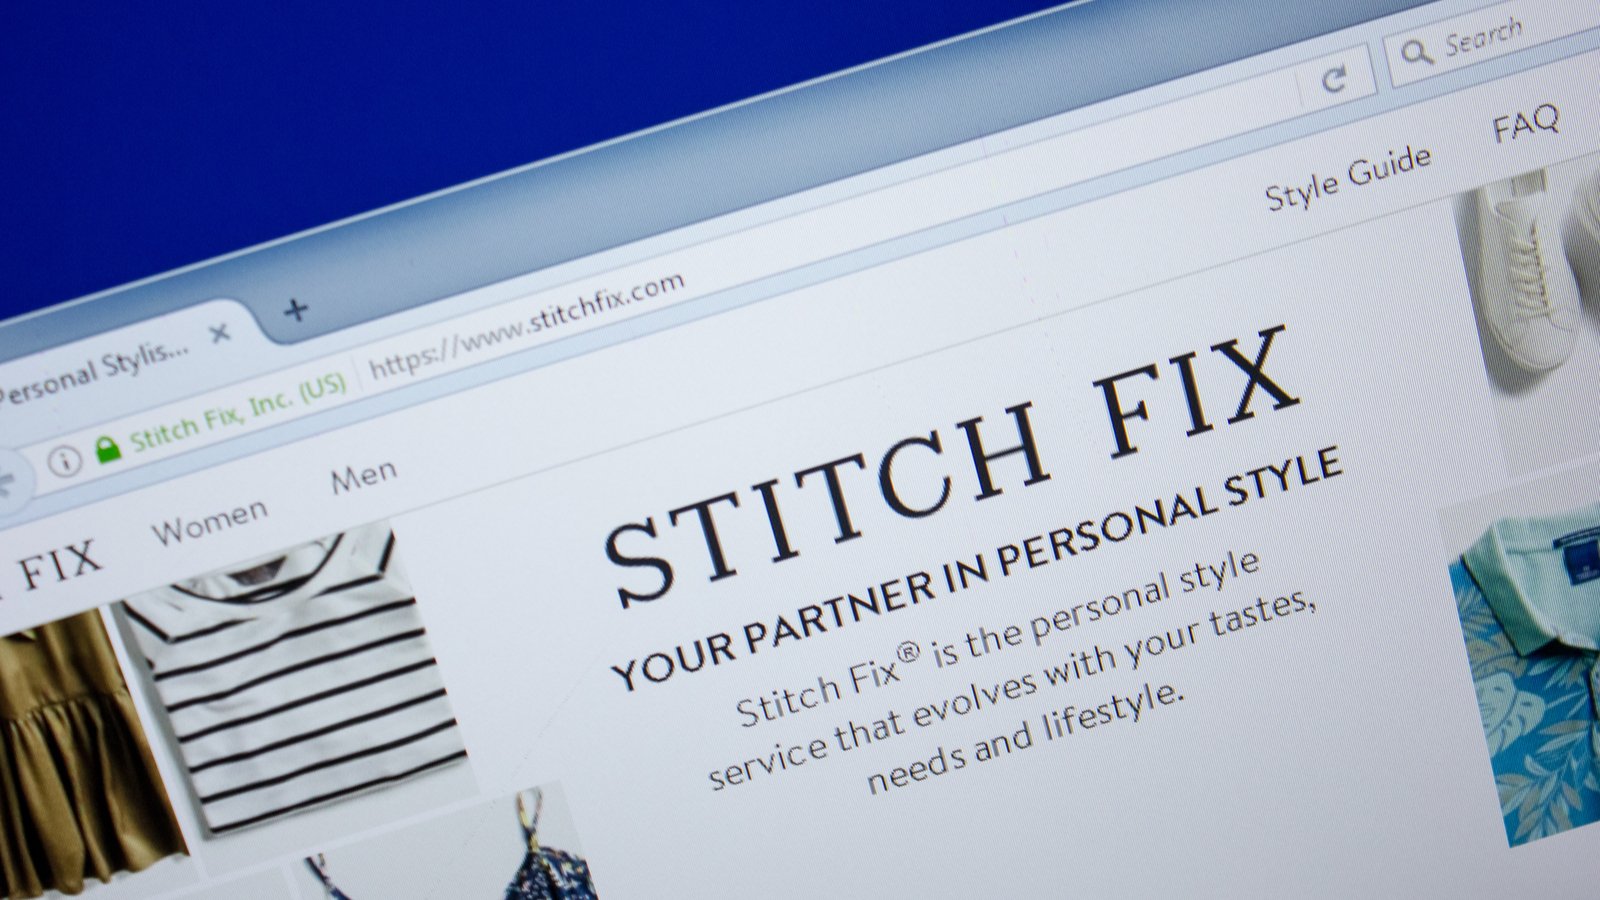 SFIX Stock: Stitch Fix Is Still Defining the Future of Shopping